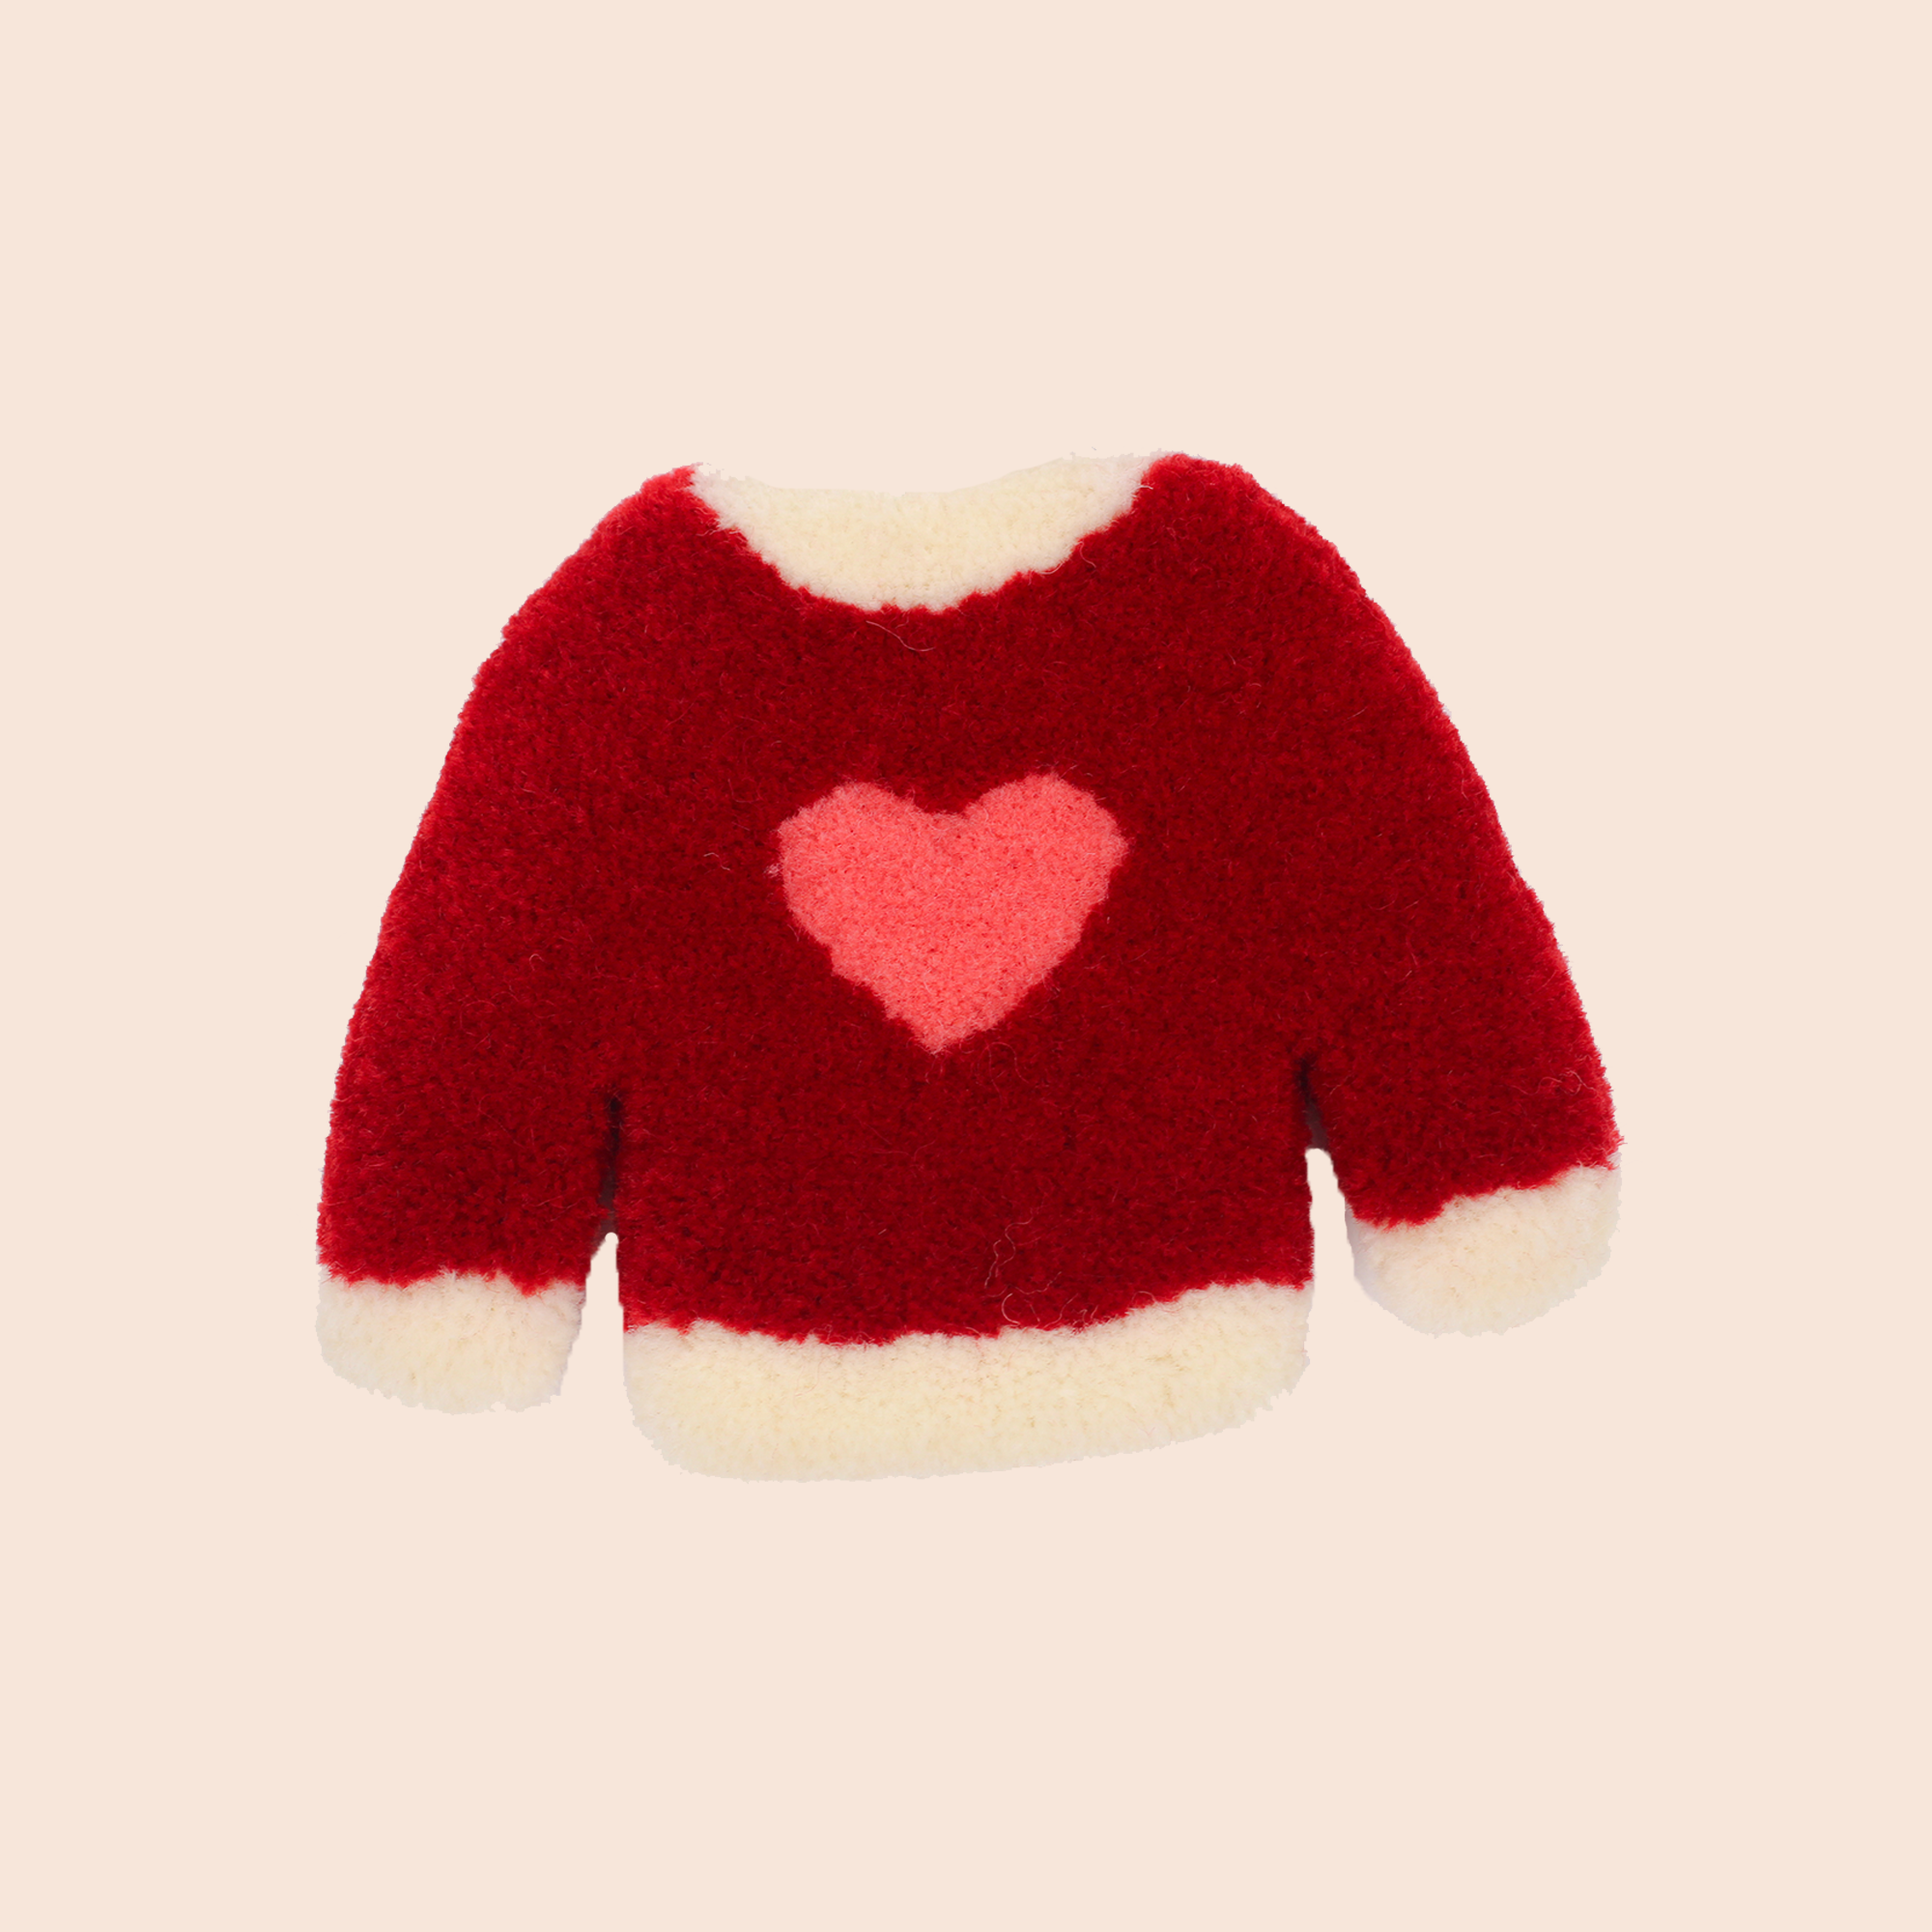 Cozy Heart Sweater Mug Rugs